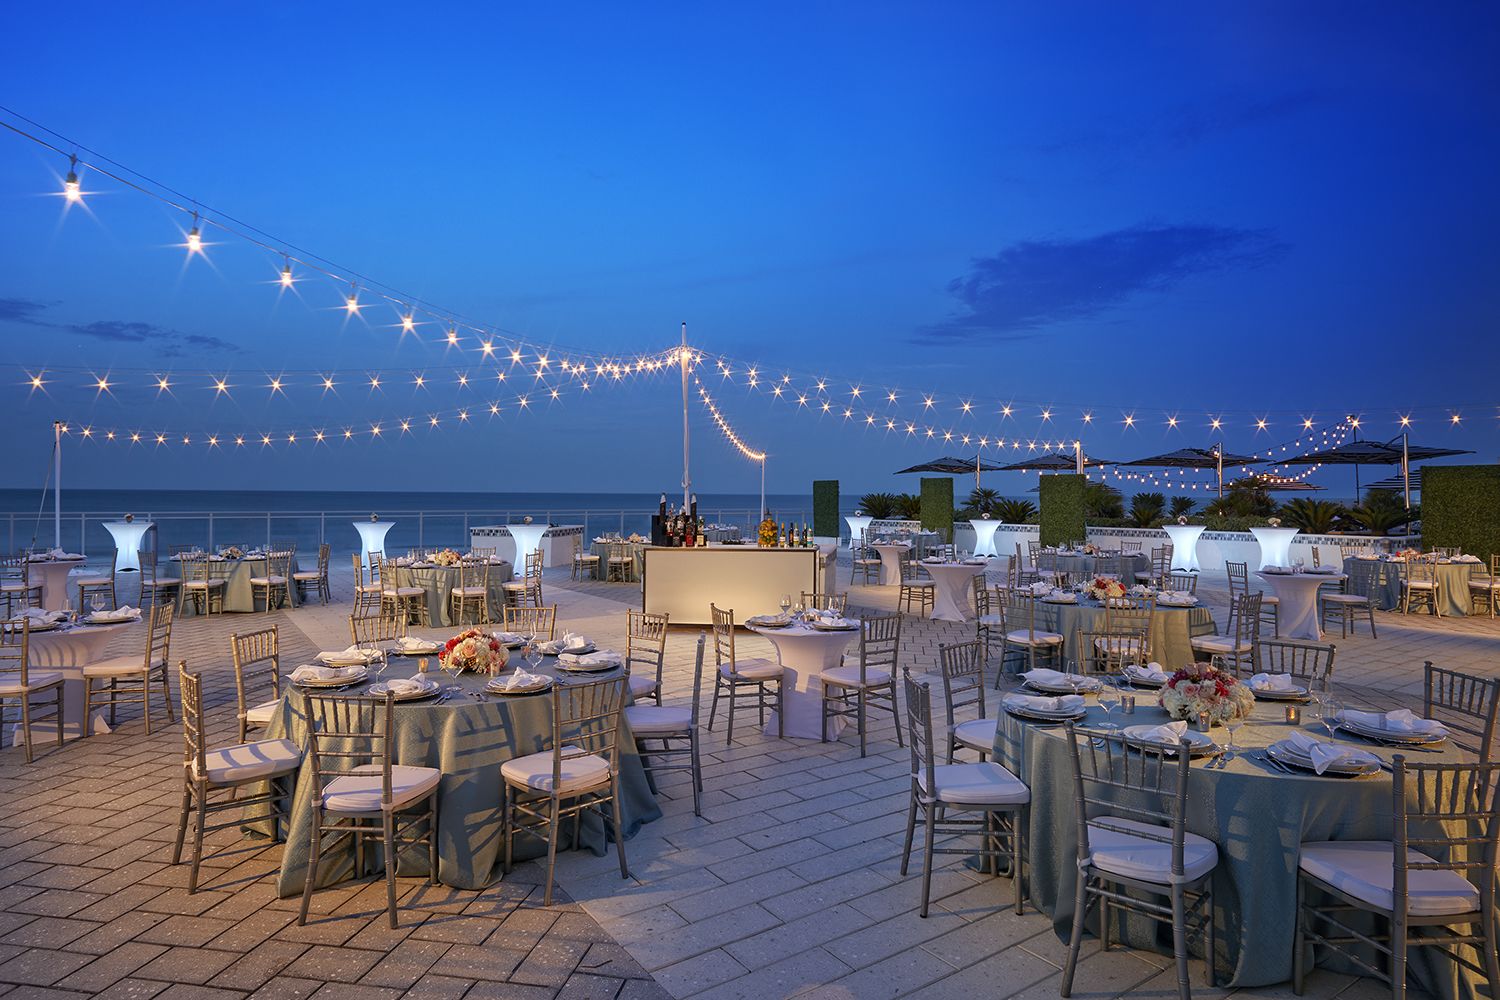 Hardrock Hotel Daytona Beach - Orlando Wedding Venues